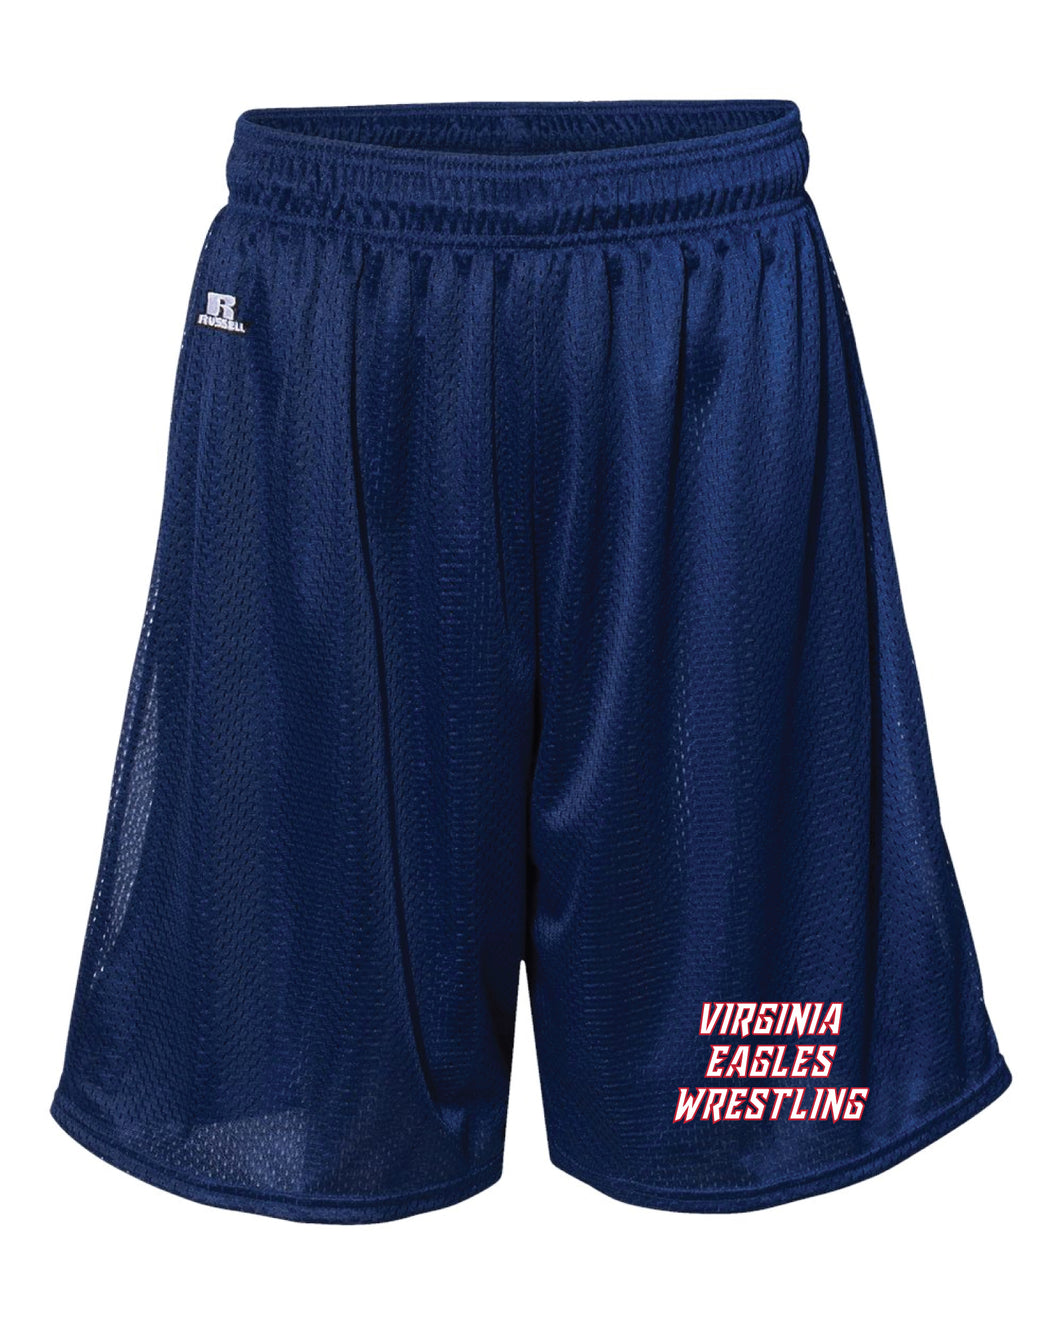 Virginia Eagles Wrestling Russell Athletic Tech Shorts - Navy - 5KounT2018